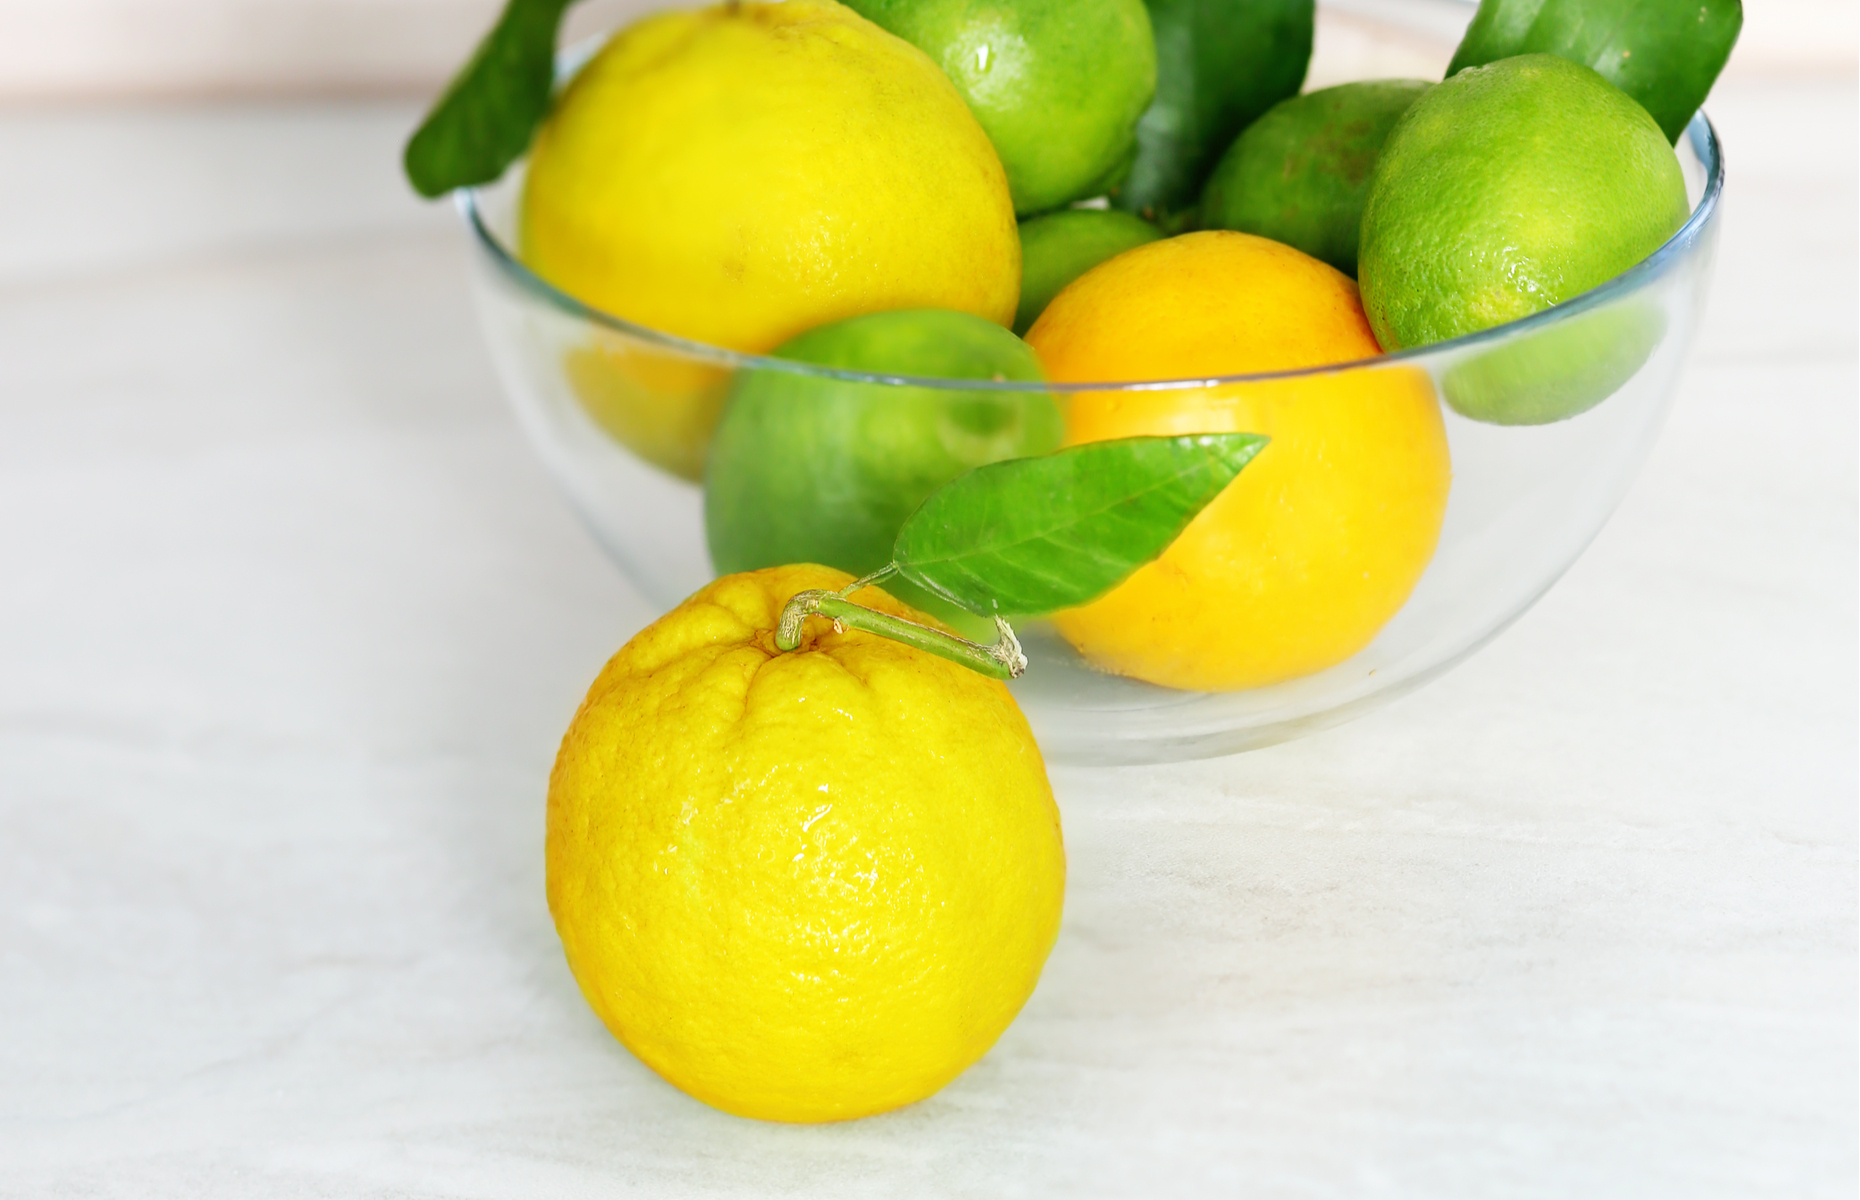 Calyx of a lemon (Image: LADO/Shutterstock)